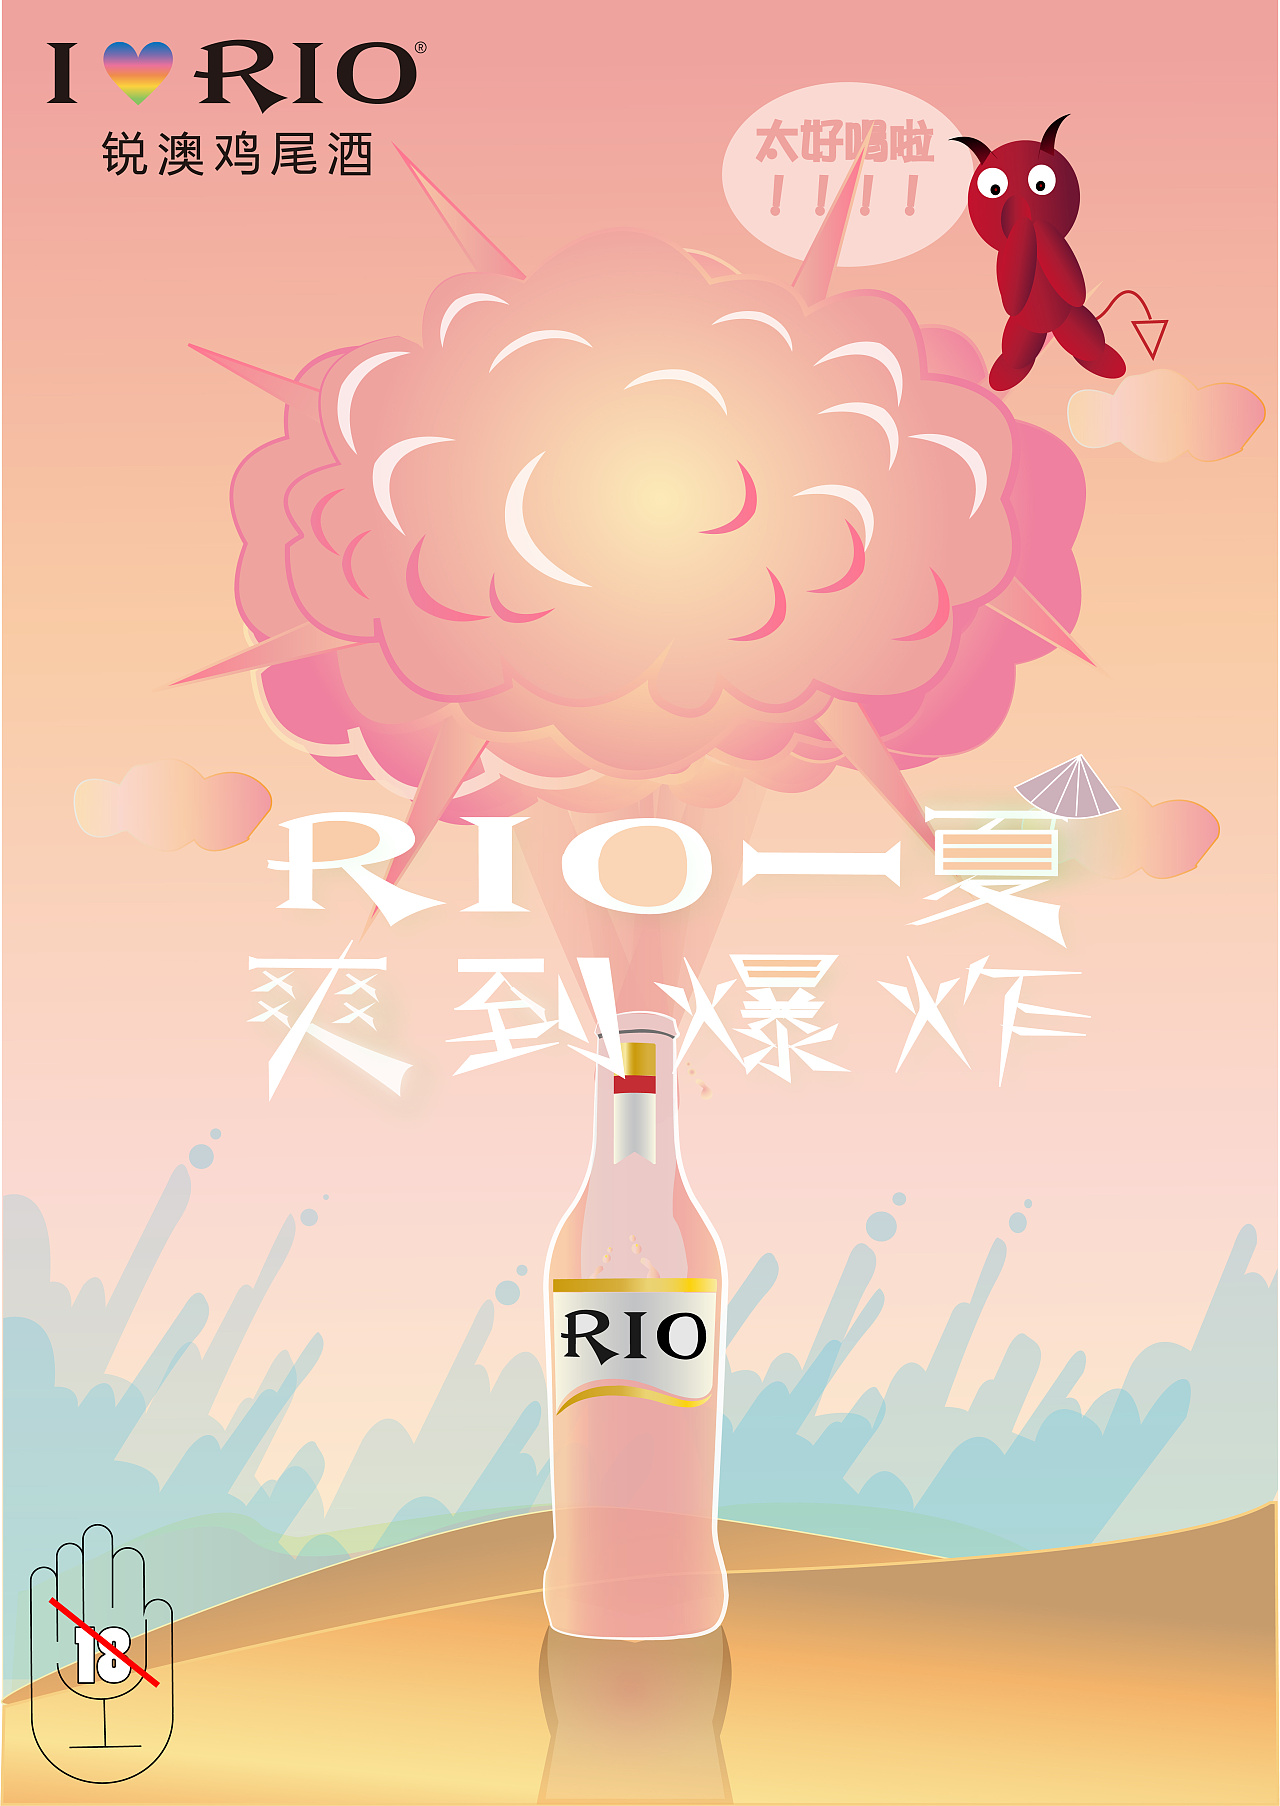 rio广告|平面|海报|zenobiagray - 原创作品 - 站酷